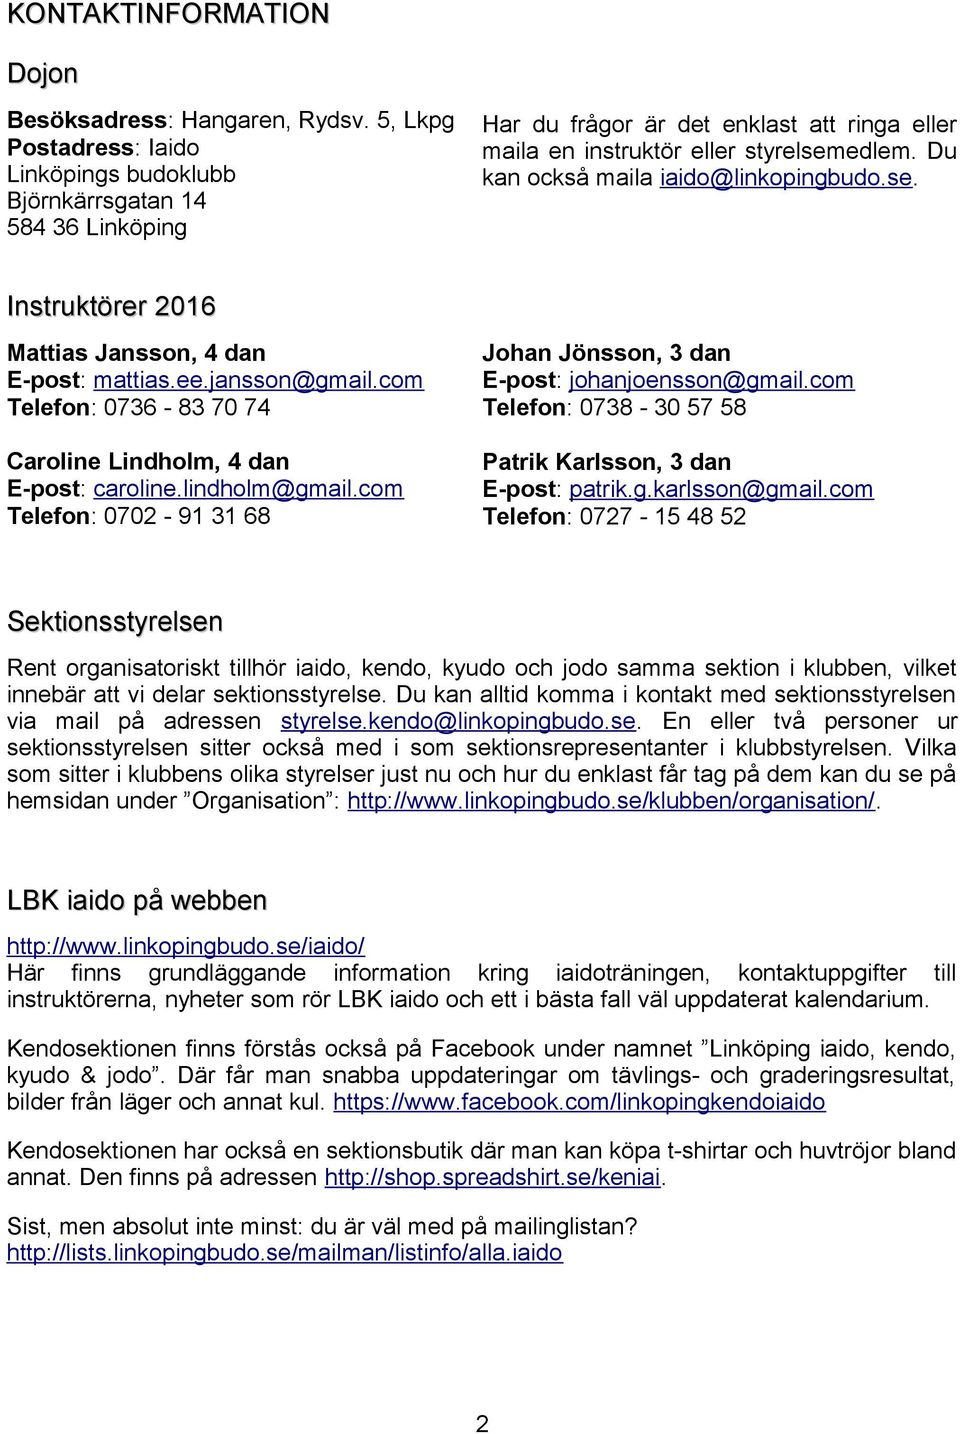 Du kan också maila iaido@linkopingbudo.se. Instruktörer 2016 Mattias Jansson, 4 dan E-post: mattias.ee.jansson@gmail.com Telefon: 0736-83 70 74 Johan Jönsson, 3 dan E-post: johanjoensson@gmail.